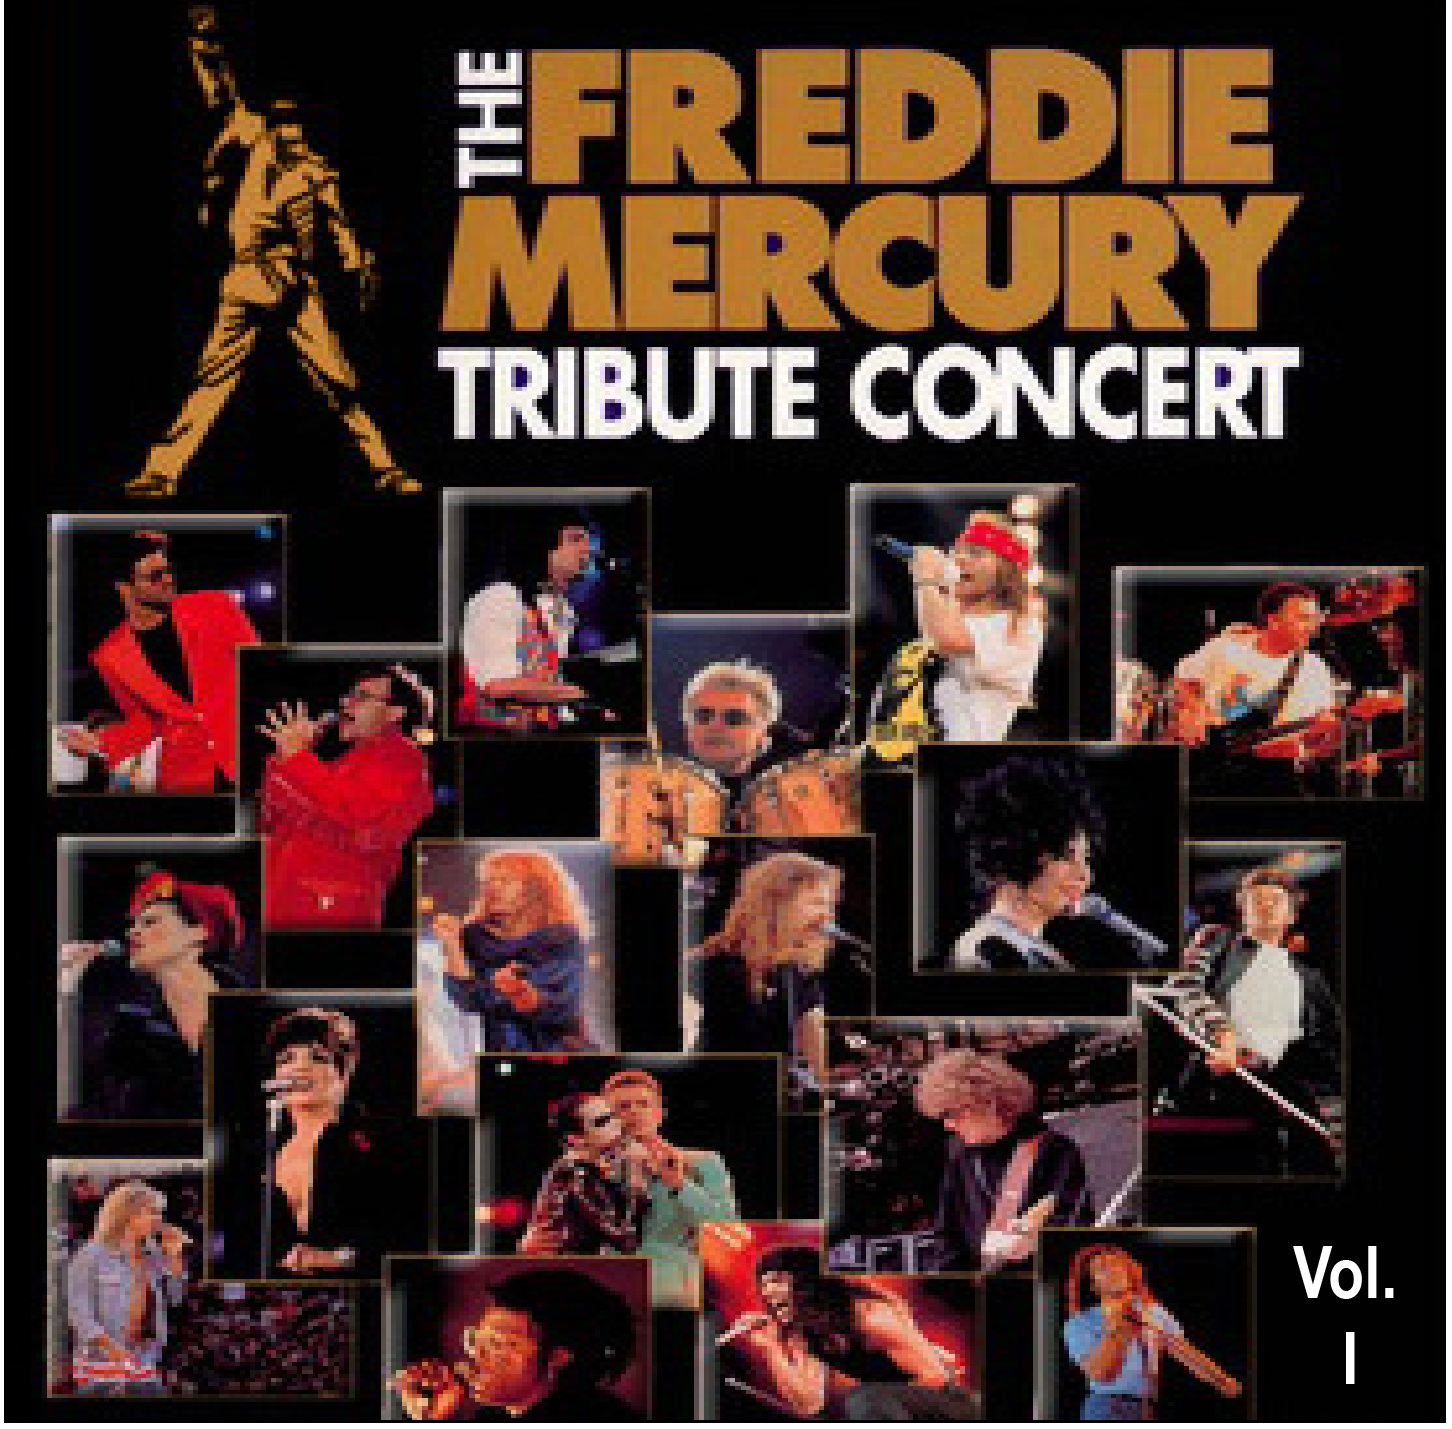 Концерт памяти фредди. Freddie Mercury Tribute Concert 1992. The Freddie Mercury Tribute Concert Калудия Брюкен. Концерт трибьют Фредди Меркьюри 1992. Extreme концерт памяти Фредди Меркьюри.